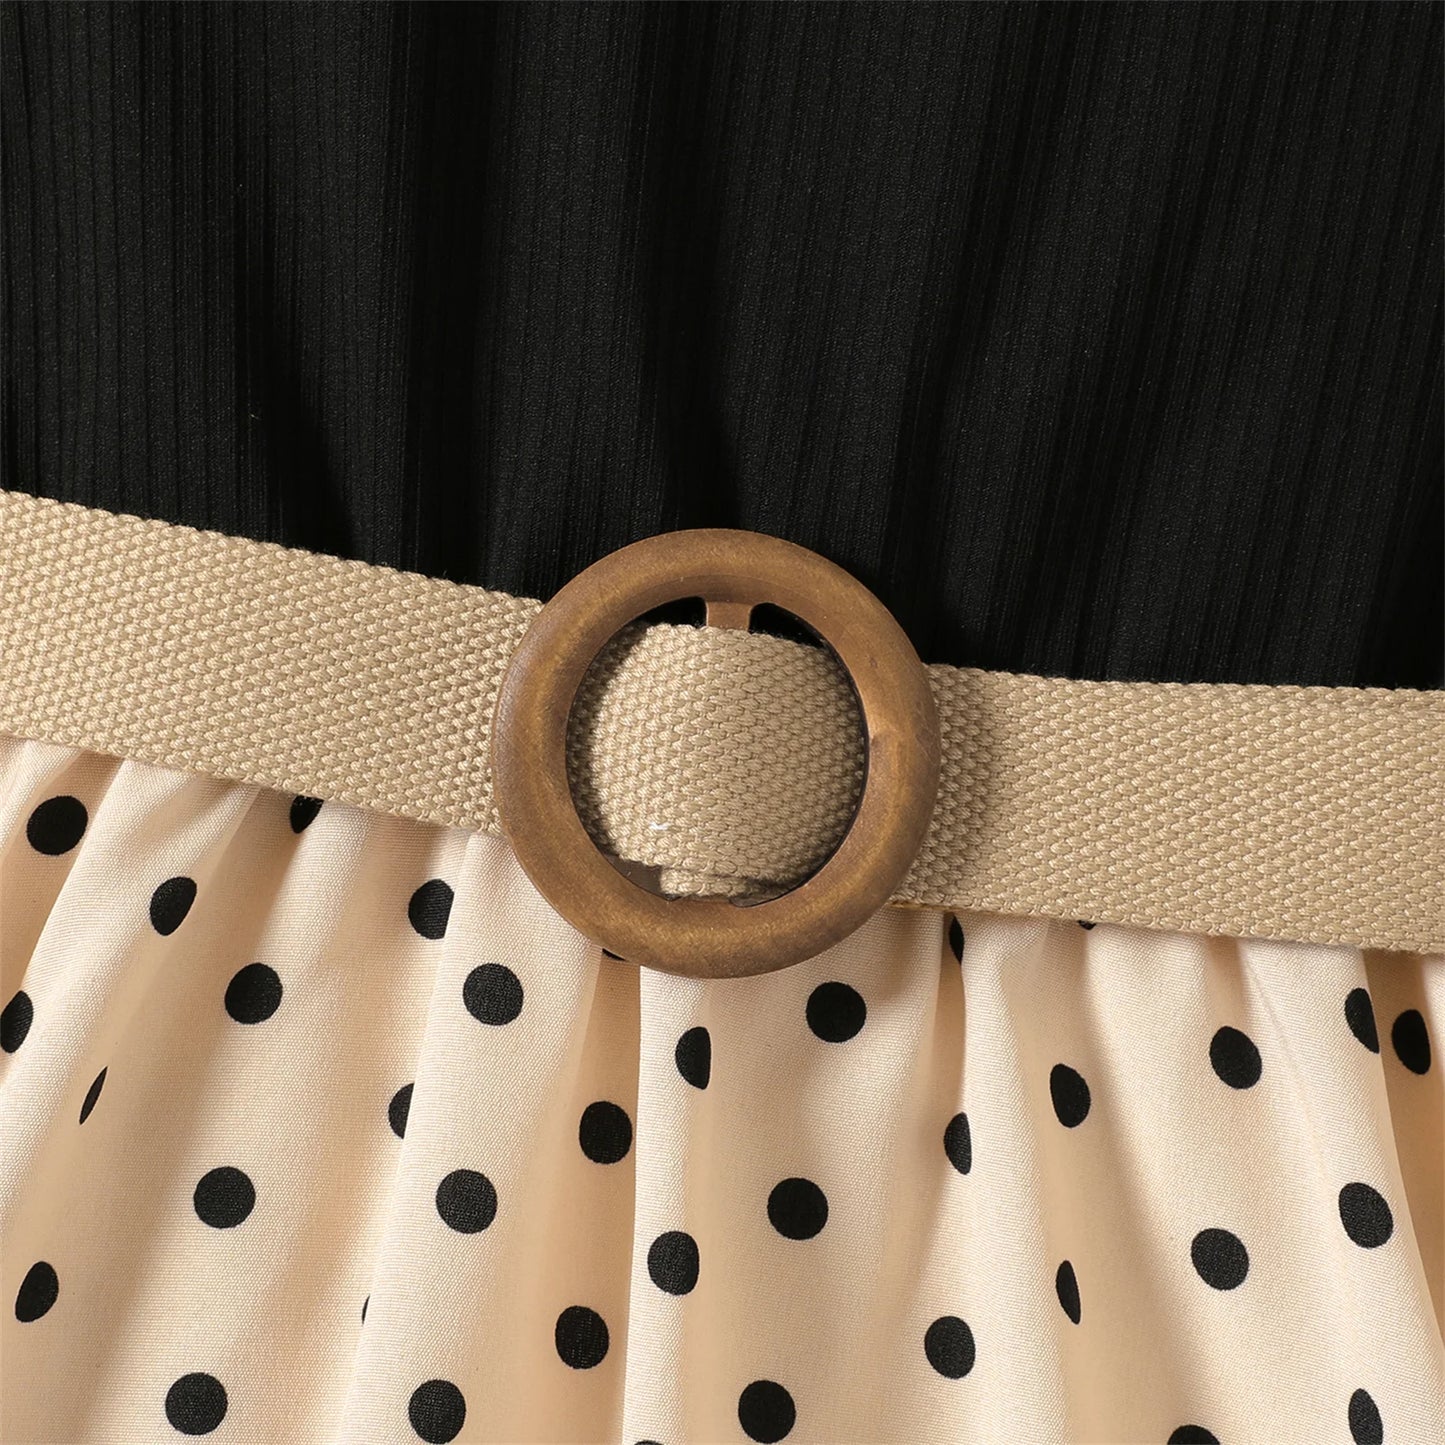 PatPat 2pcs Girl Dresses Kids Clothes Girl Polka Dots Ribbed Girls Splice Sleeveless Dress & Belt